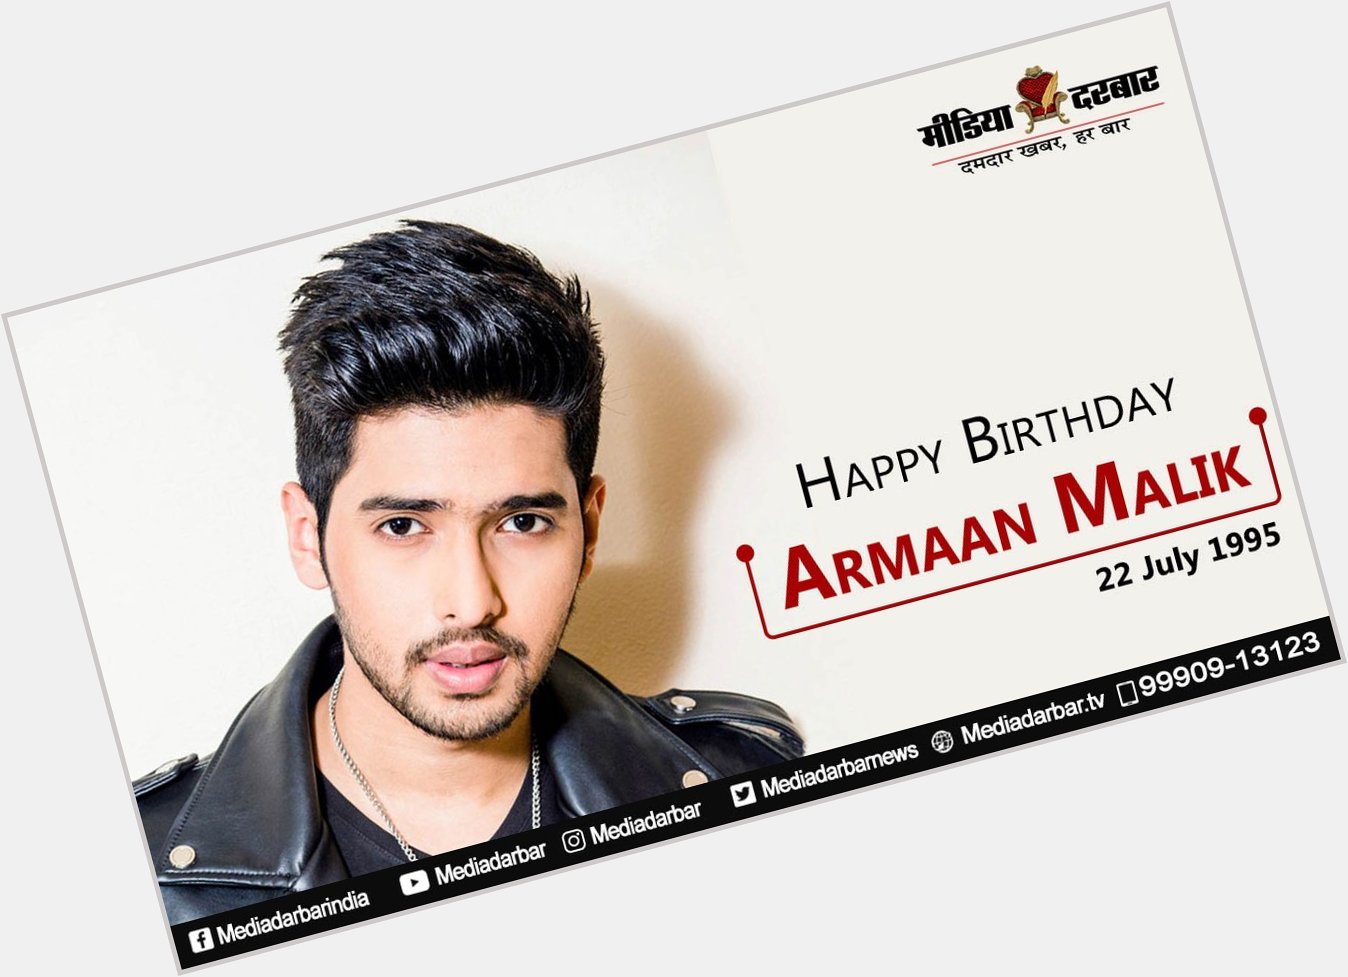 Wishing Very Happy Birthday to Armaan Malik.  